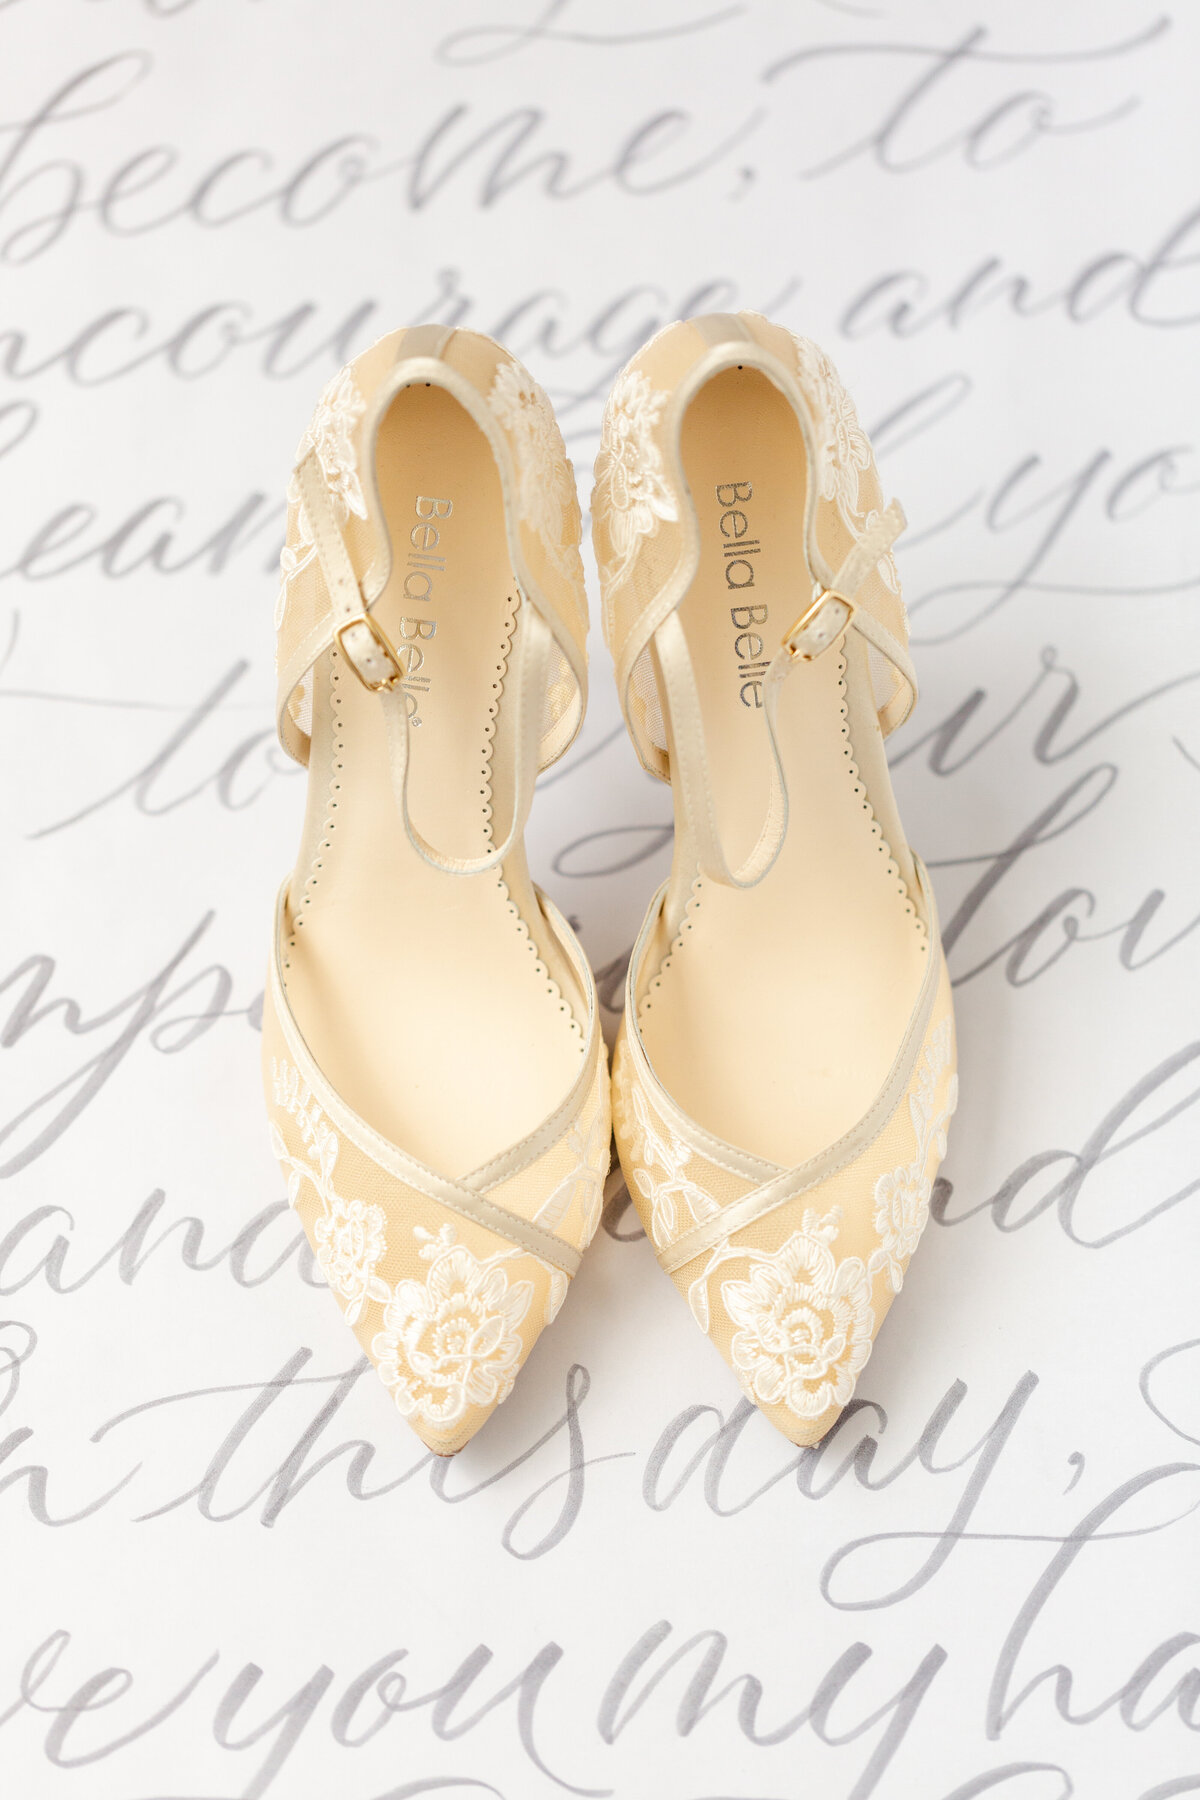 bridal shoes on hand darn wedding vows for Ohio wedding